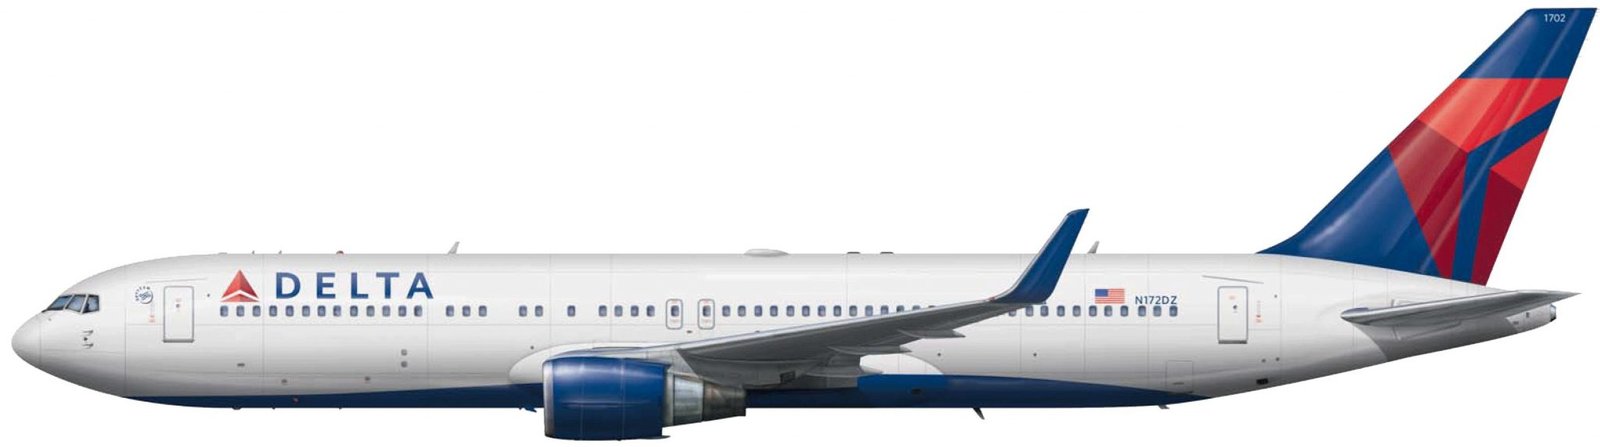 Боинг 737-800 вид сбоку